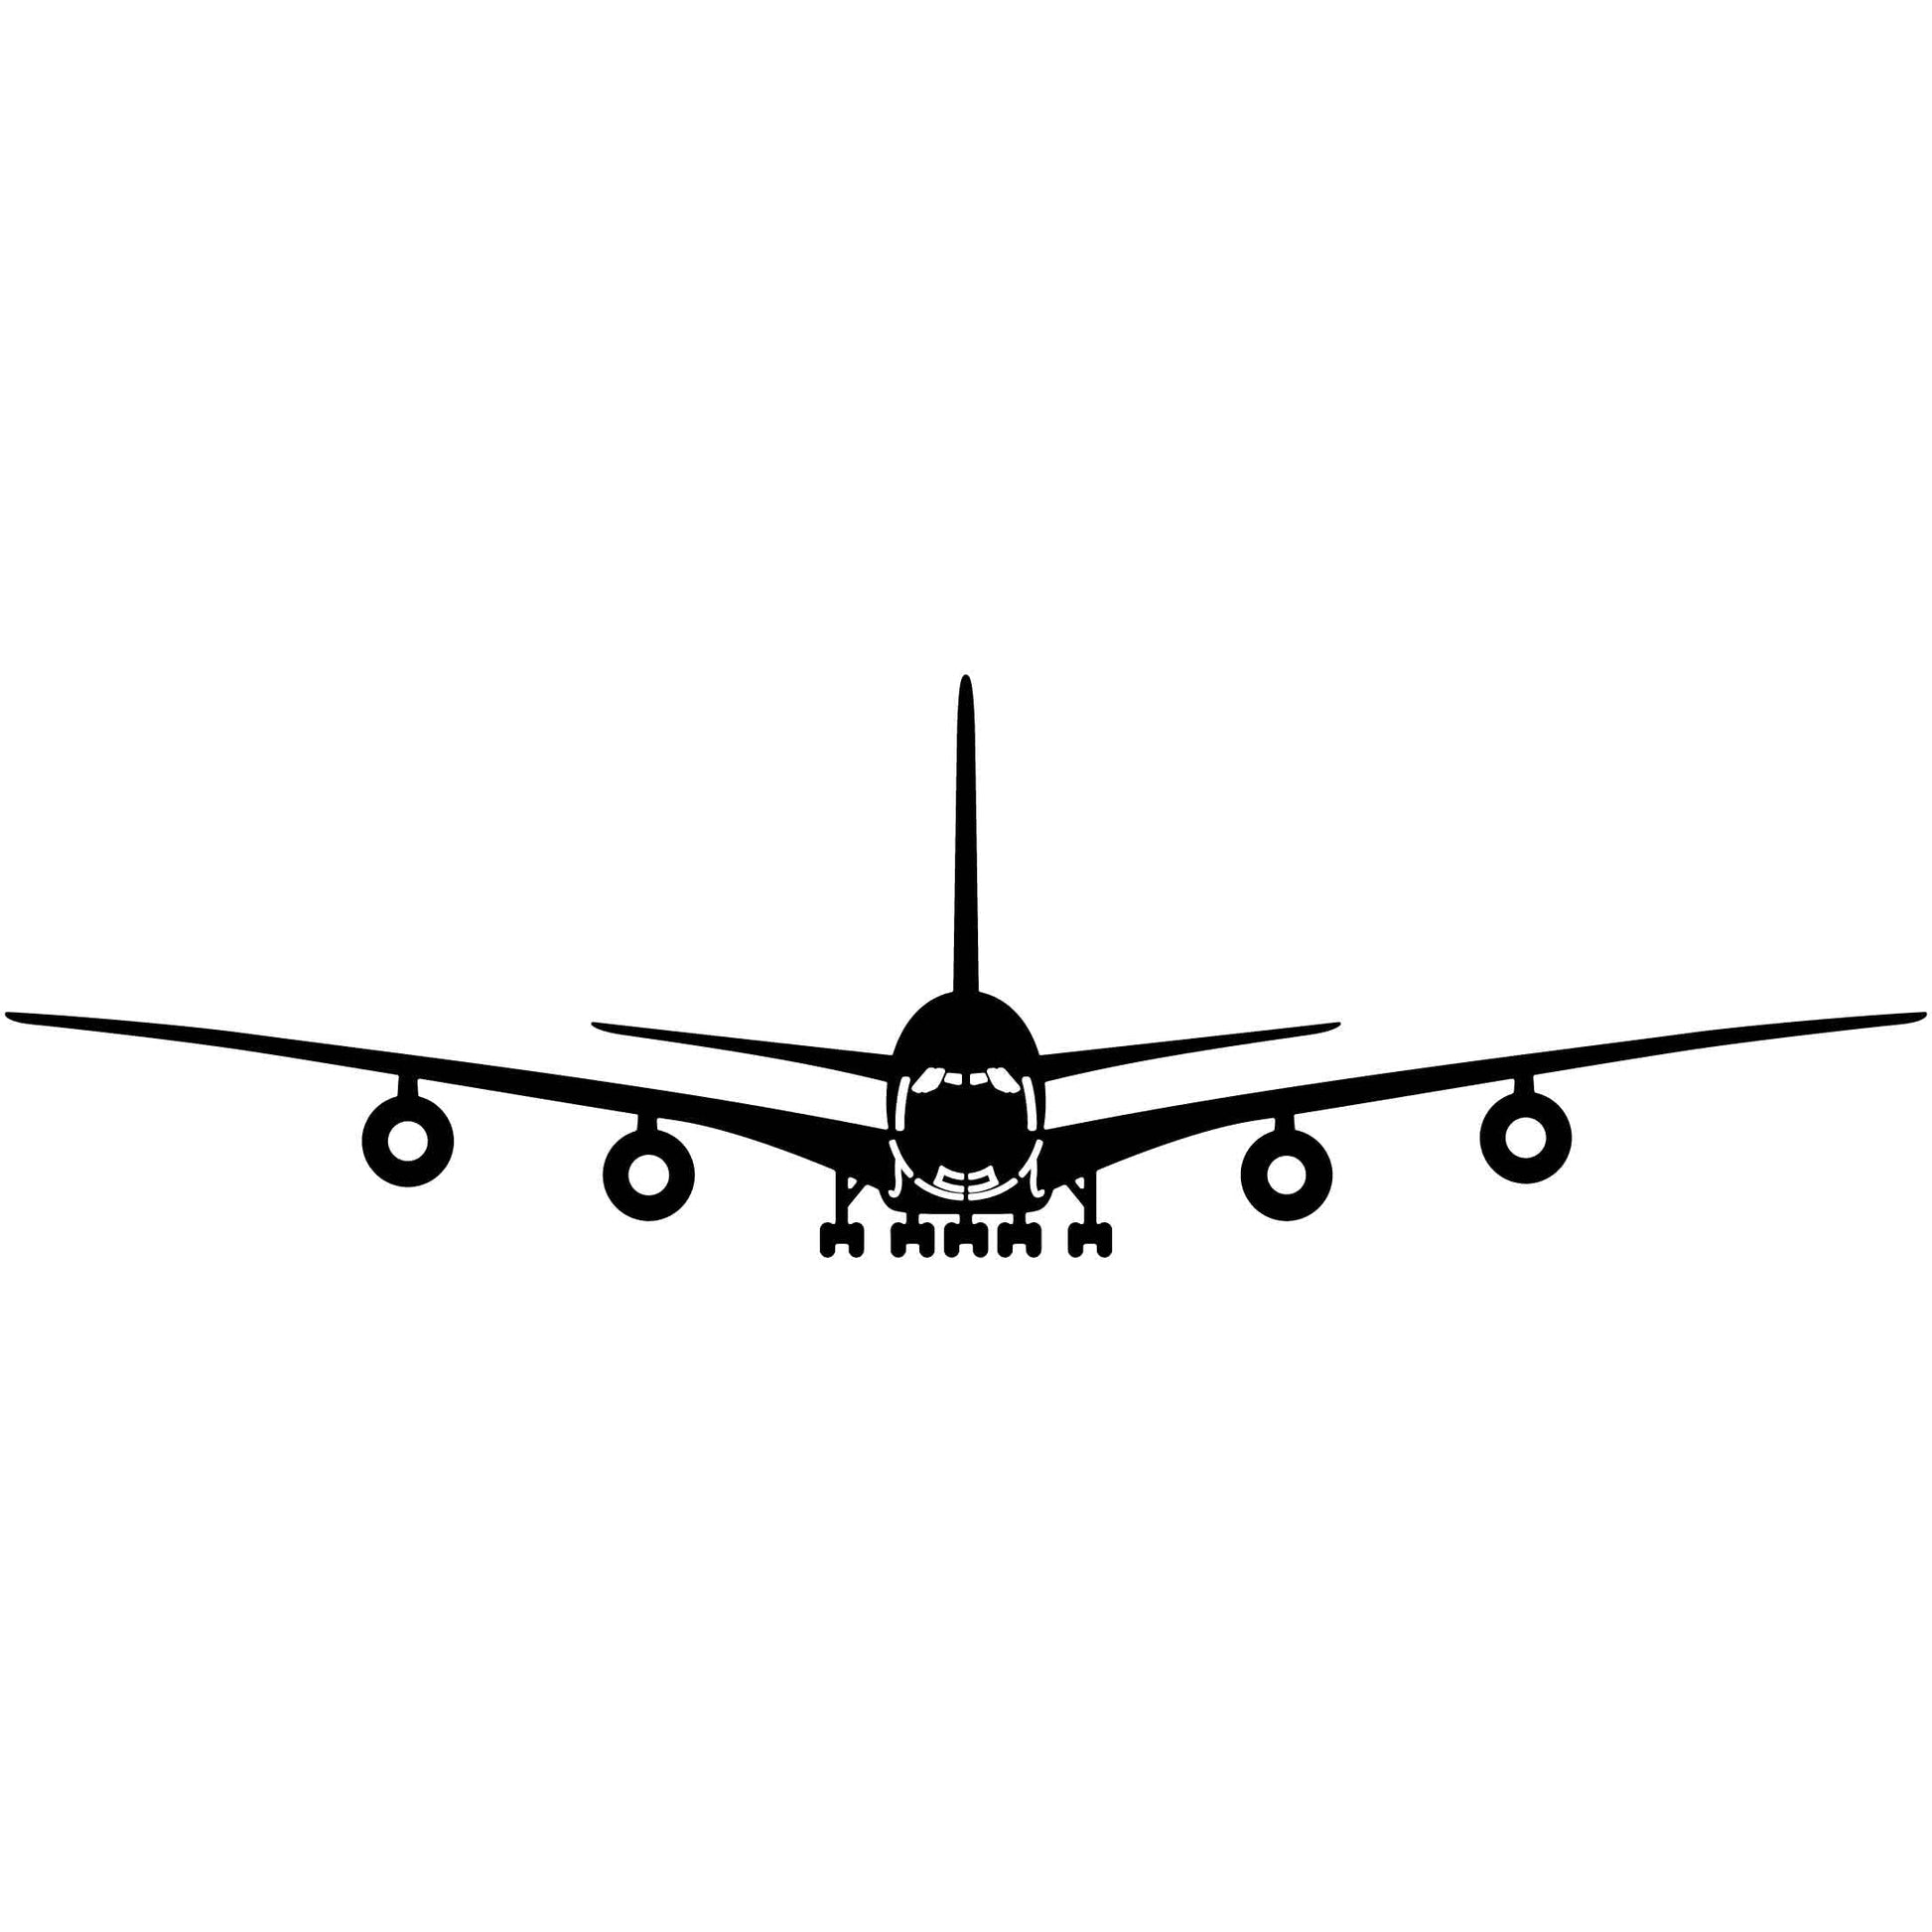 Civil Aircraft-DXF files Cut Ready CNC Designs-dxfforcnc.com